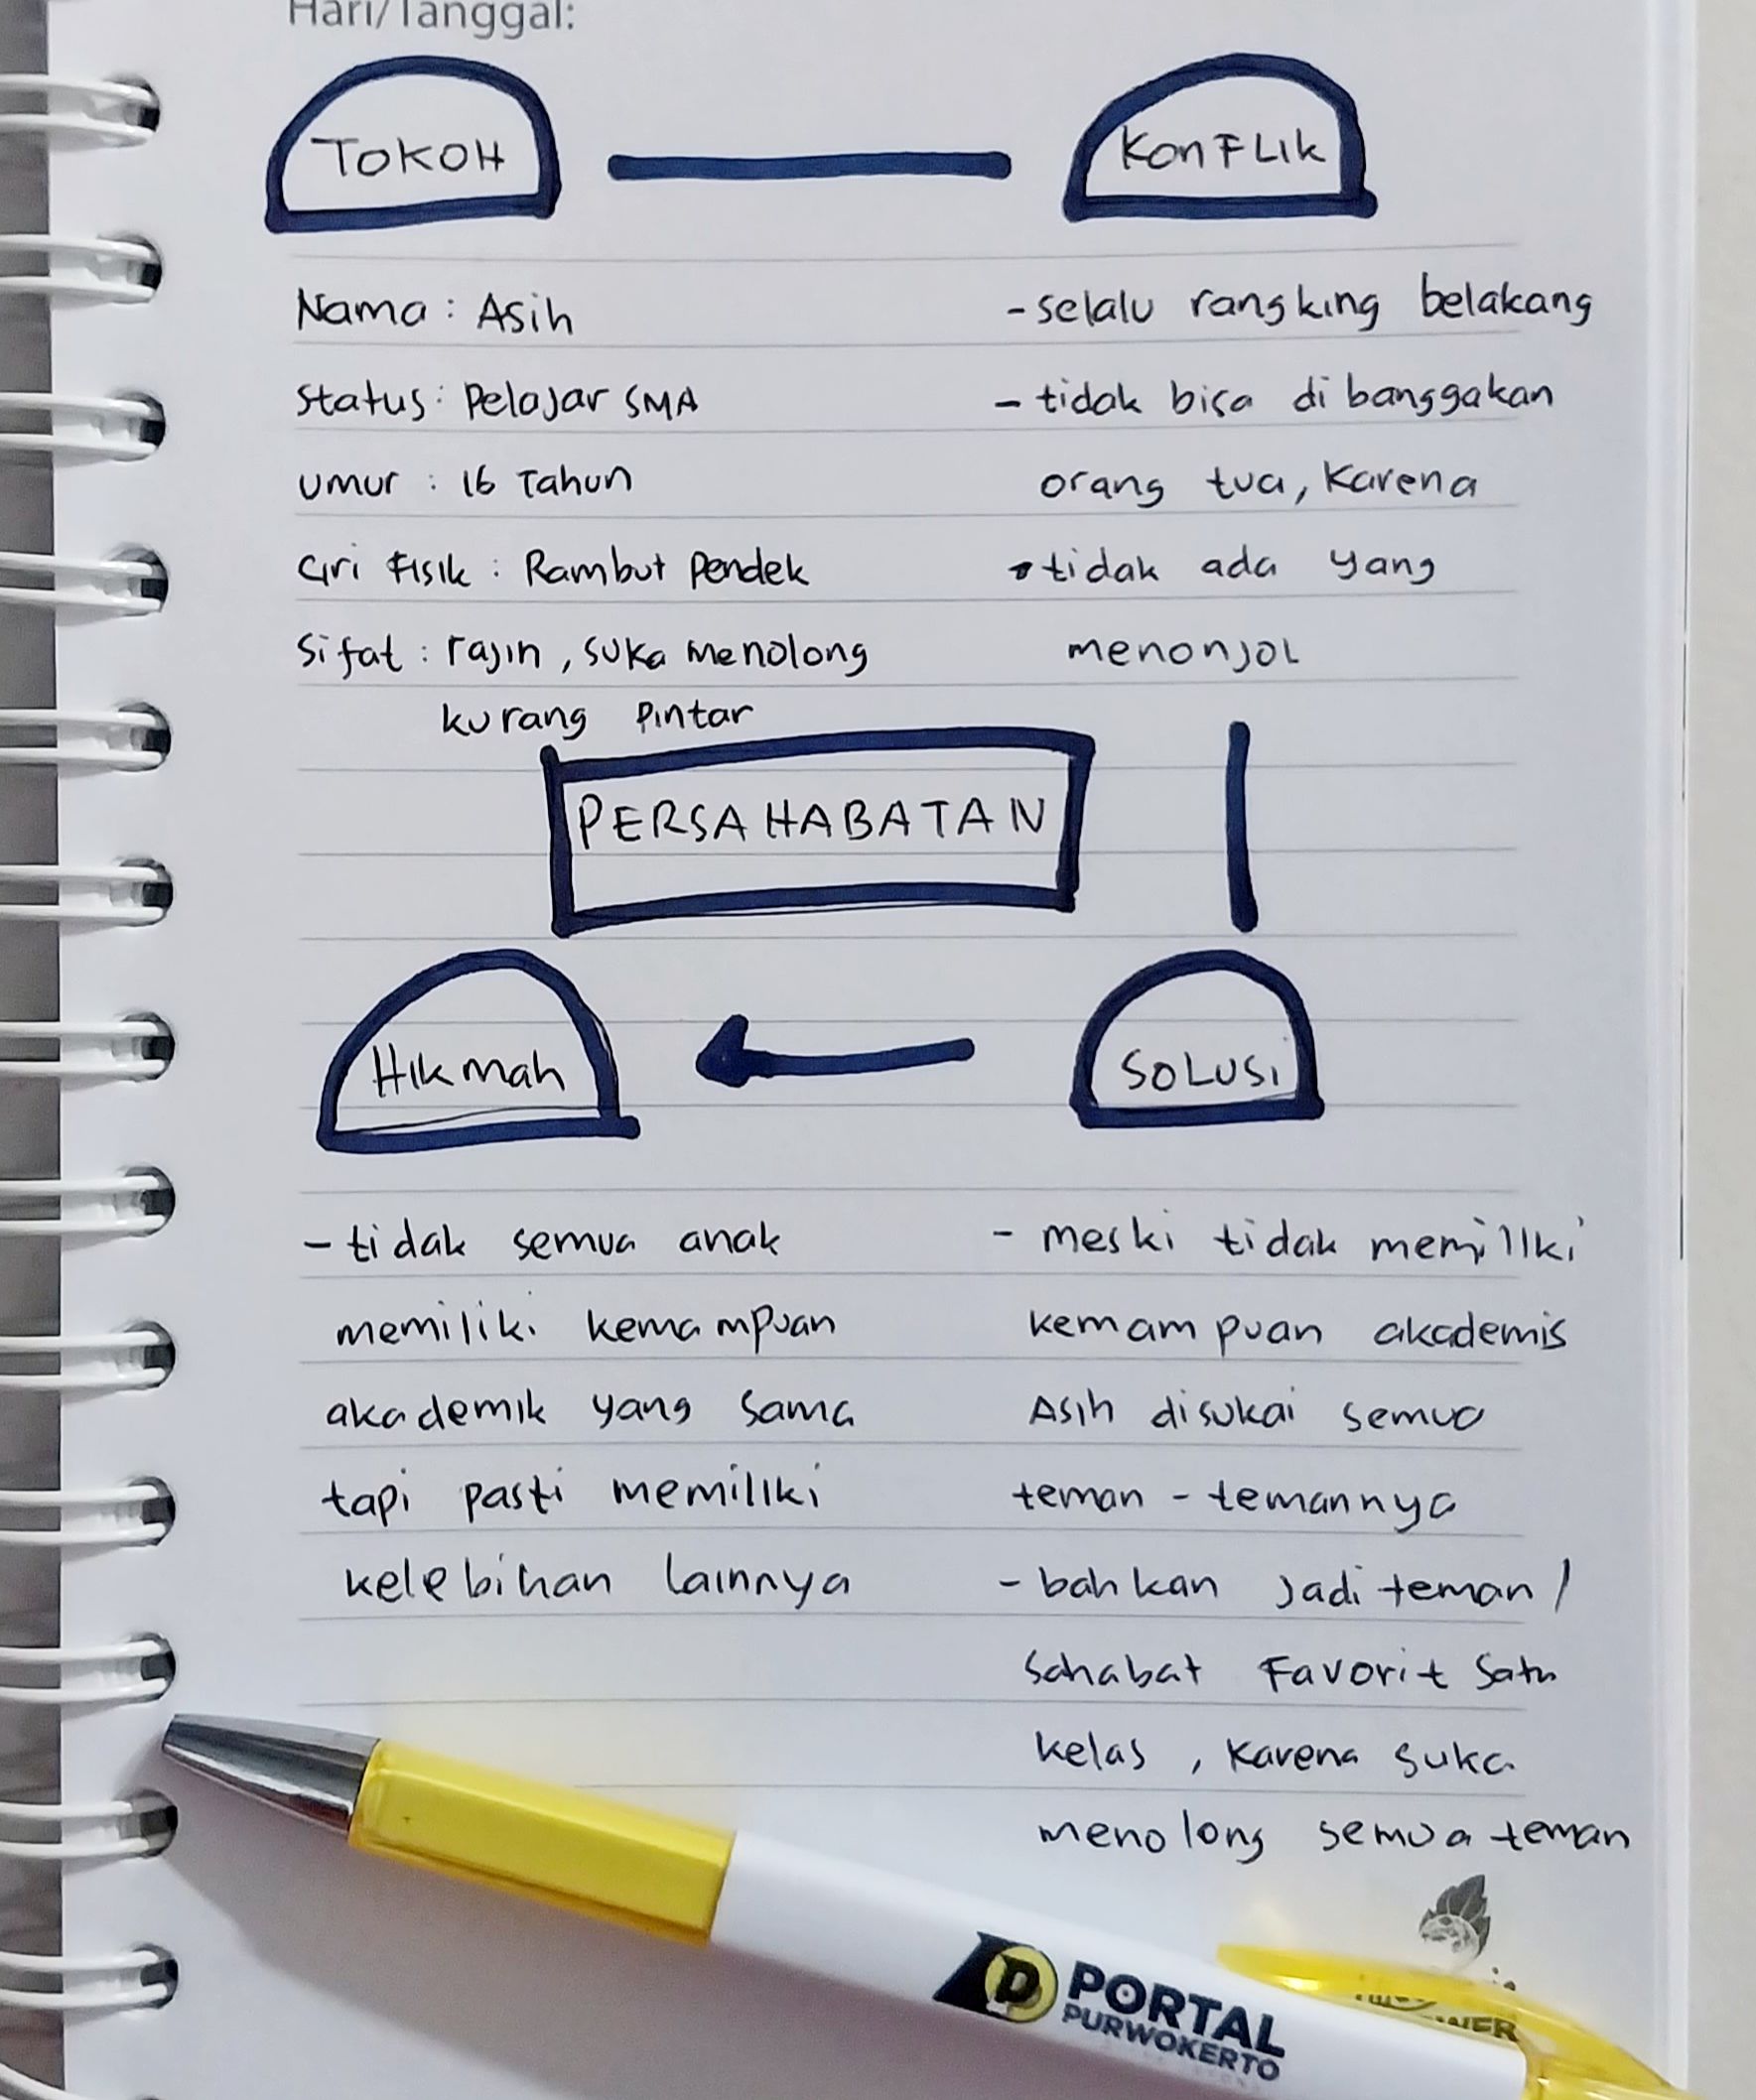 Kci awaba Bahasa Indonesia kelas 10 halaman 74. Peta Konsep Cerpen